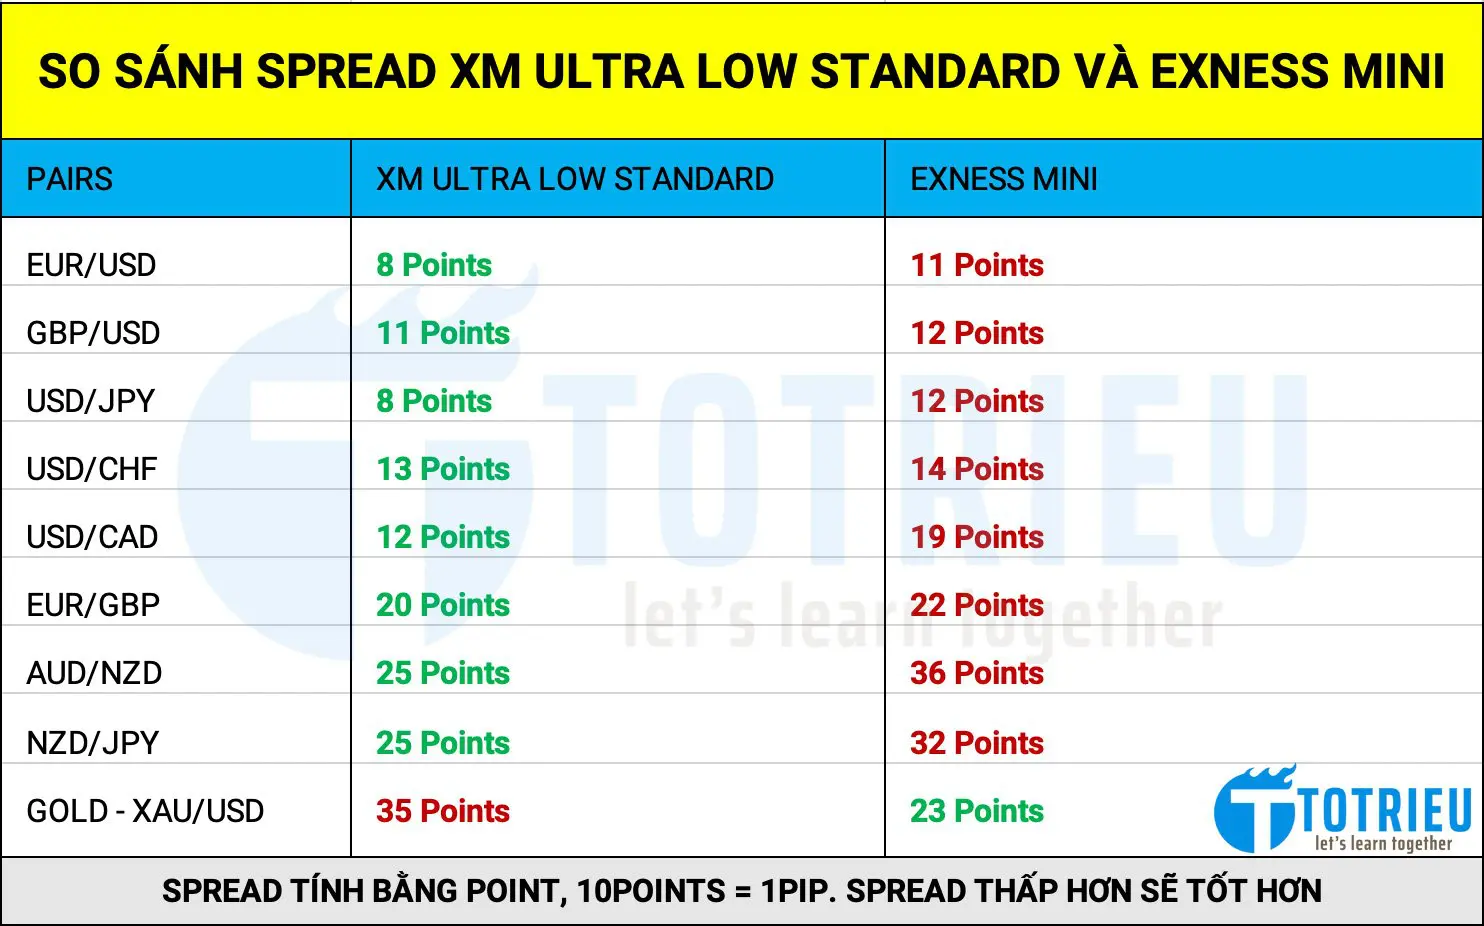 So sánh Spread XM Ultra Low Standard và Exness Mini